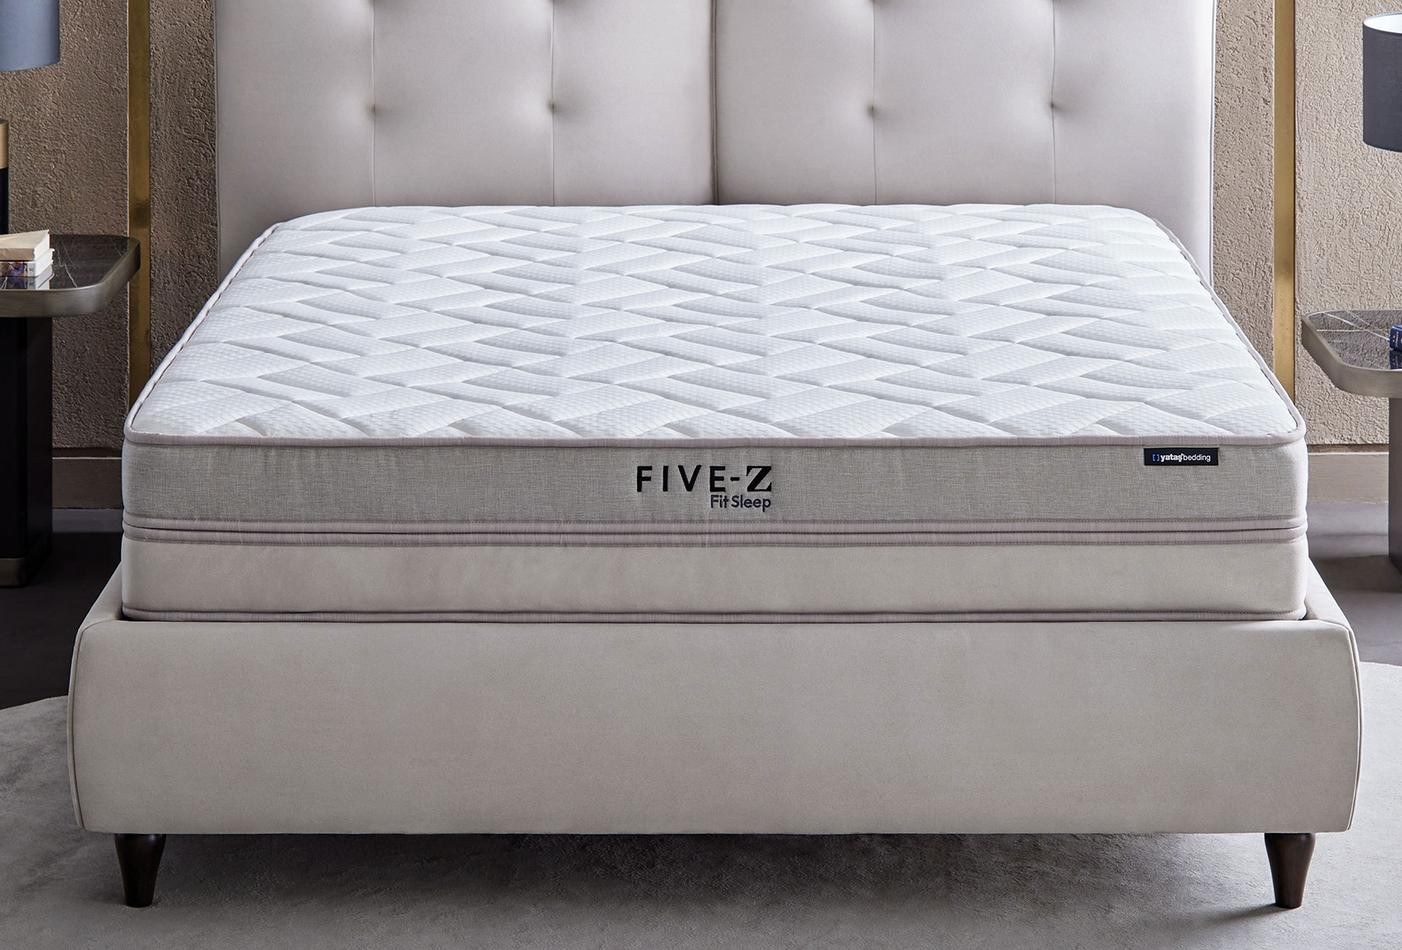 Enza Home Five-Z Fit Sleep, Pocket Yaylı Seri Yatak, 090x190 cm